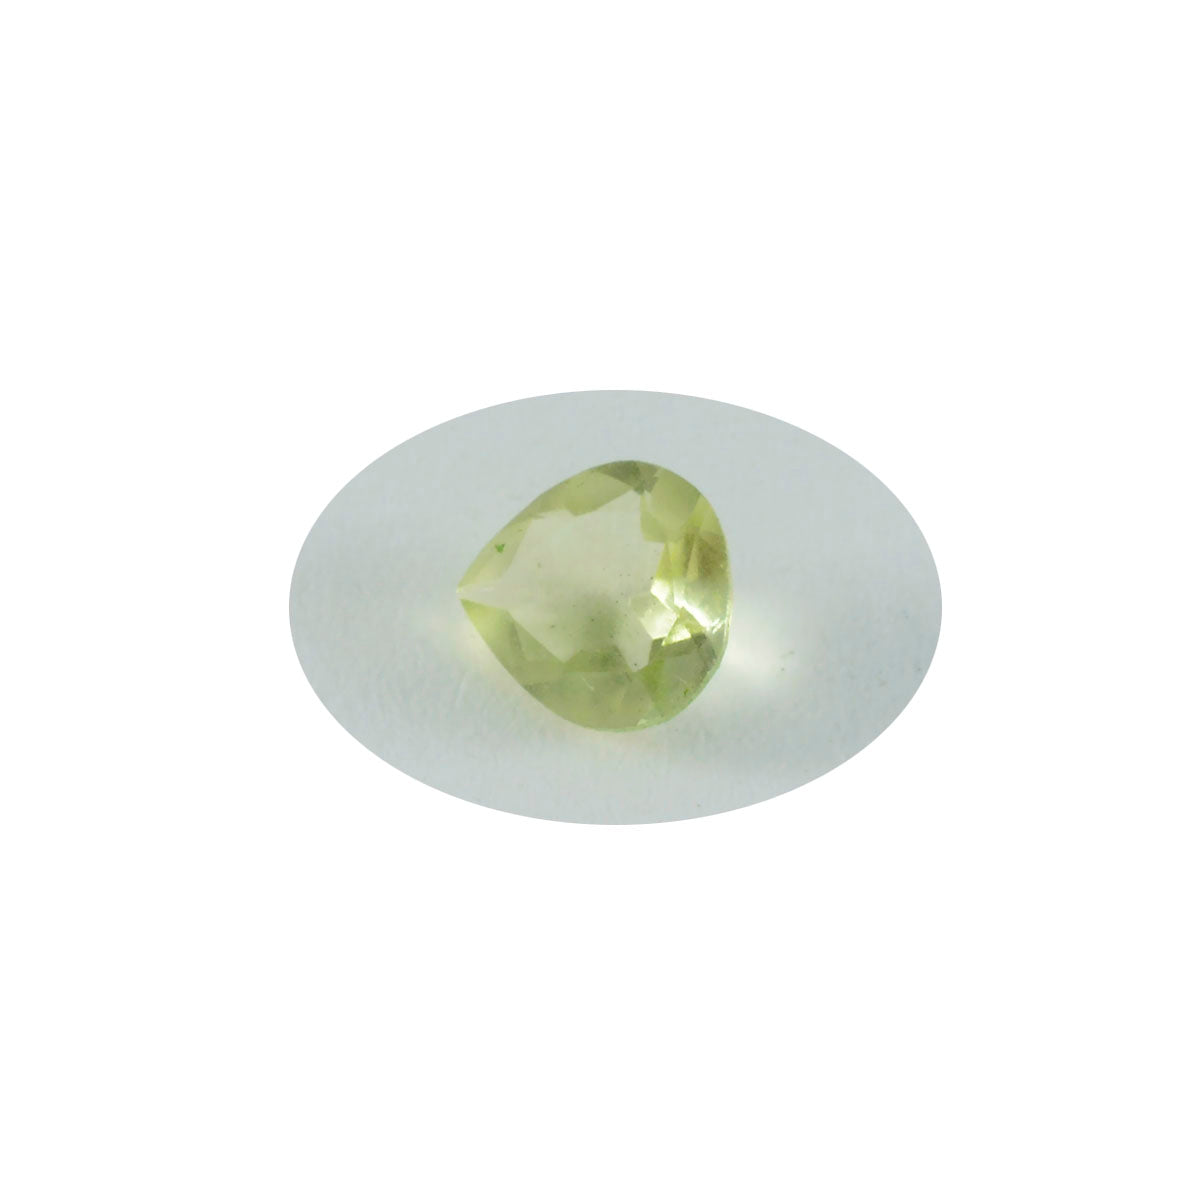 Riyogems 1PC Yellow Lemon Quartz Faceted 15x15 mm Heart Shape sweet Quality Gems